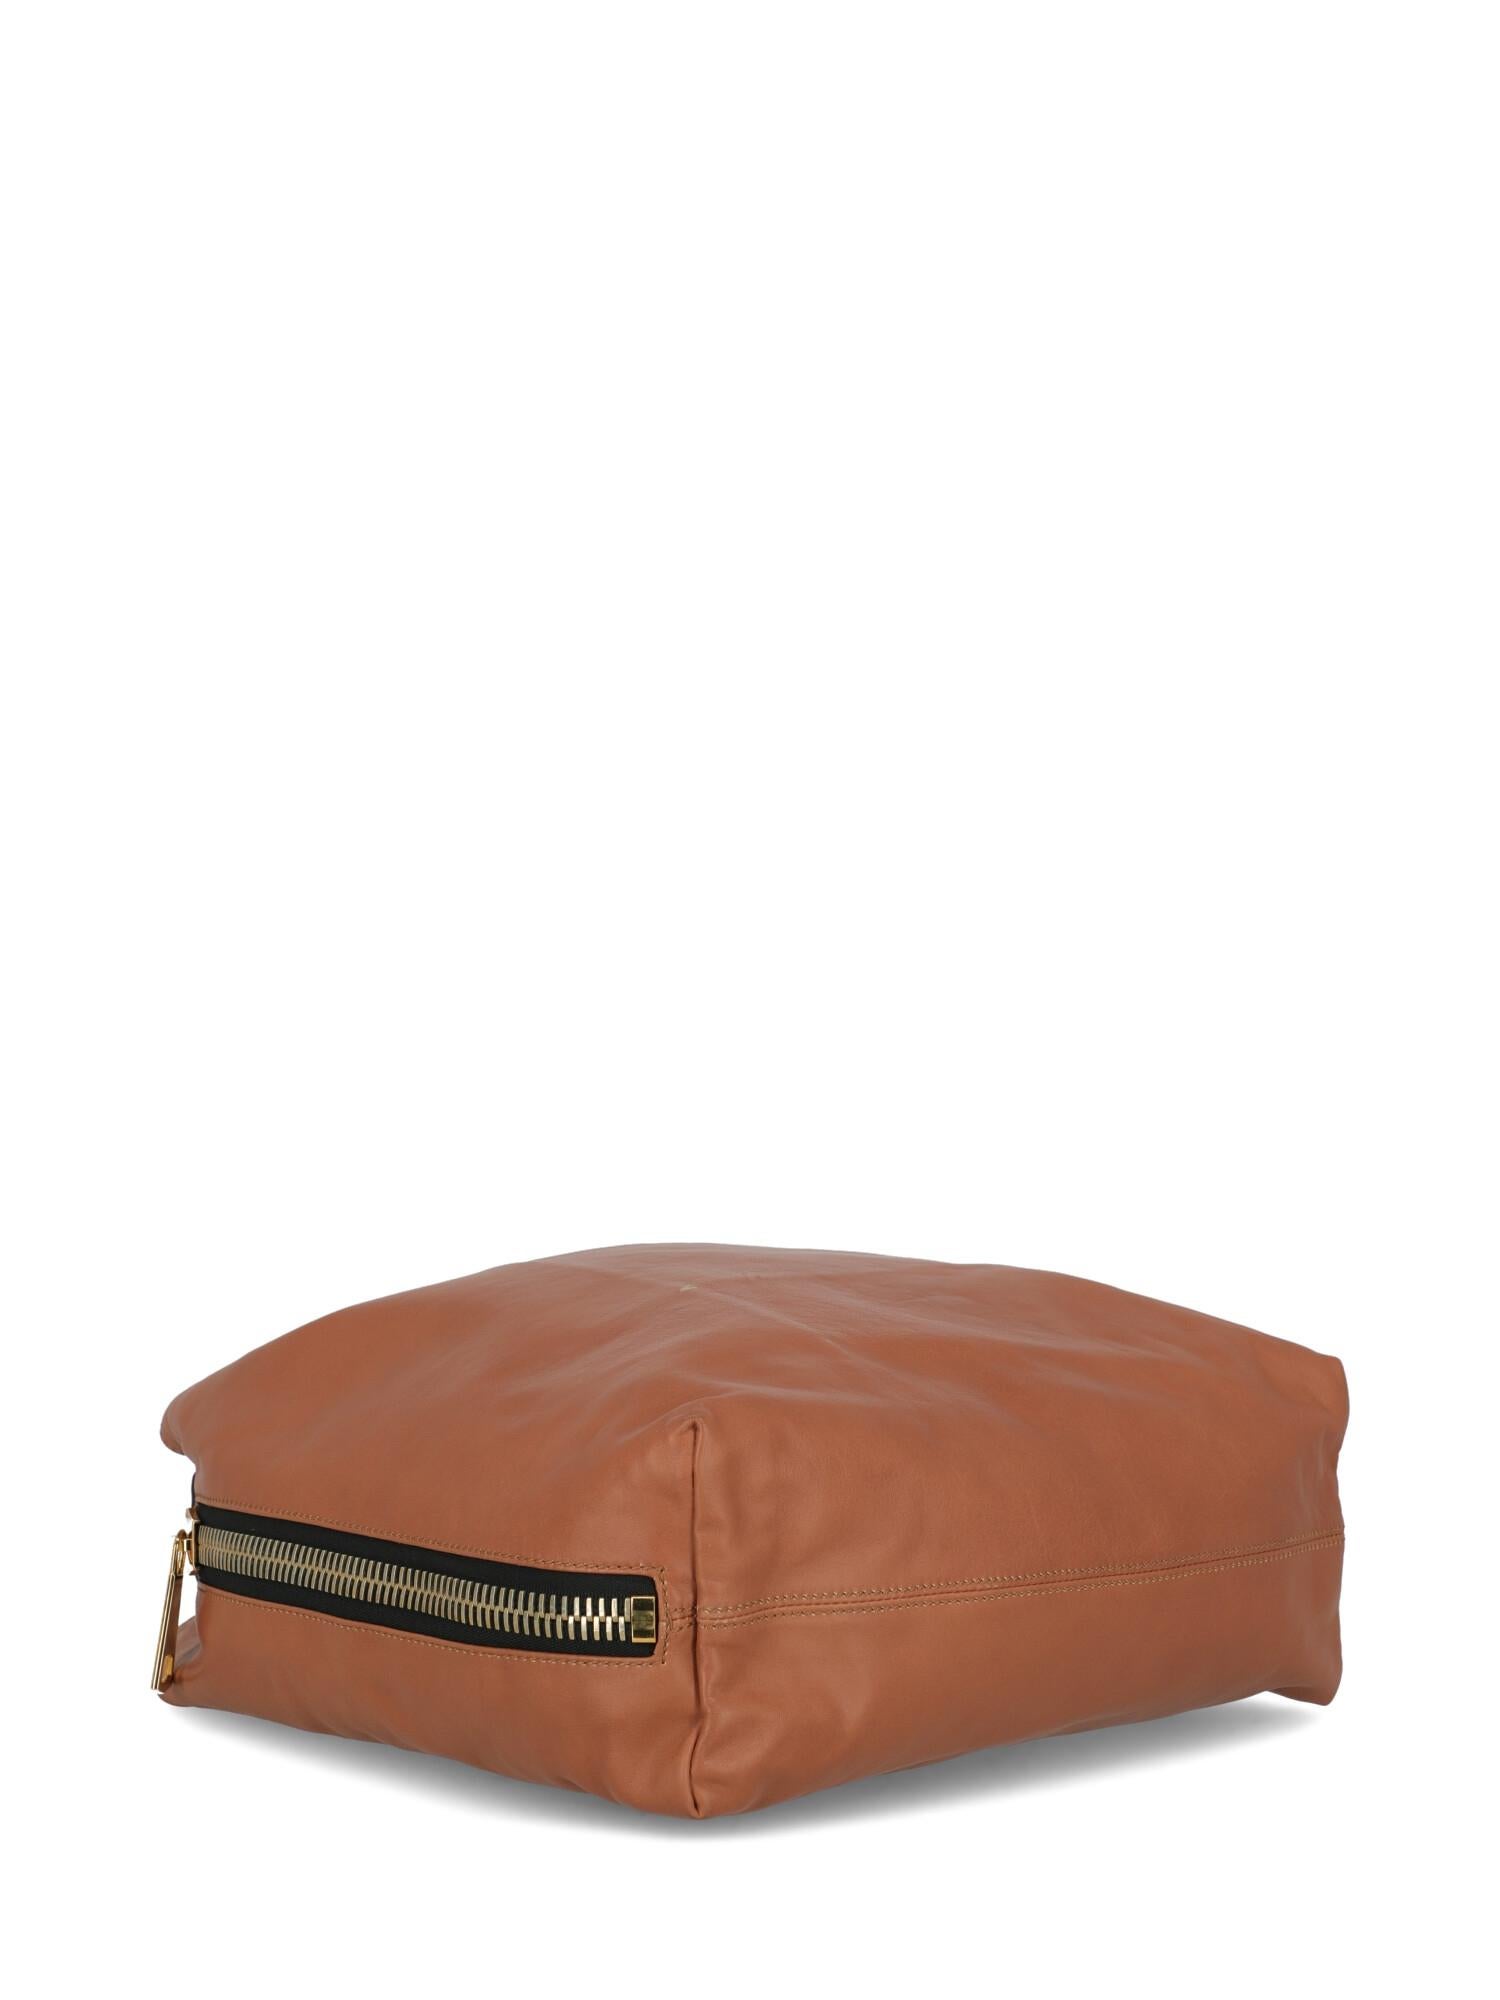 Women's Gianfranco Ferre Woman Handbag Brown Leather For Sale